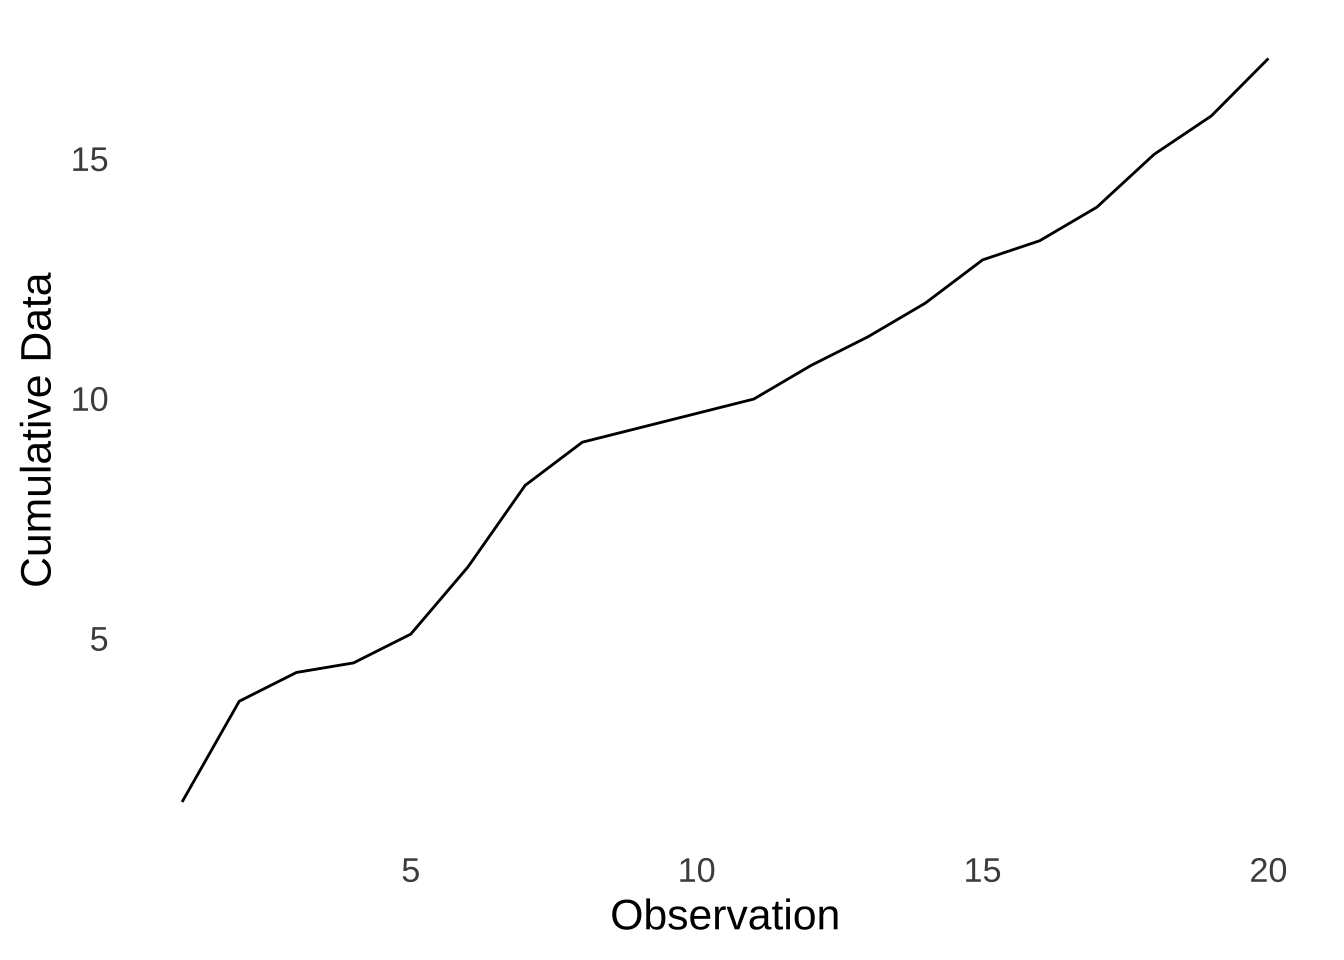 Empirical Cumulative Curve of the Made-up Data